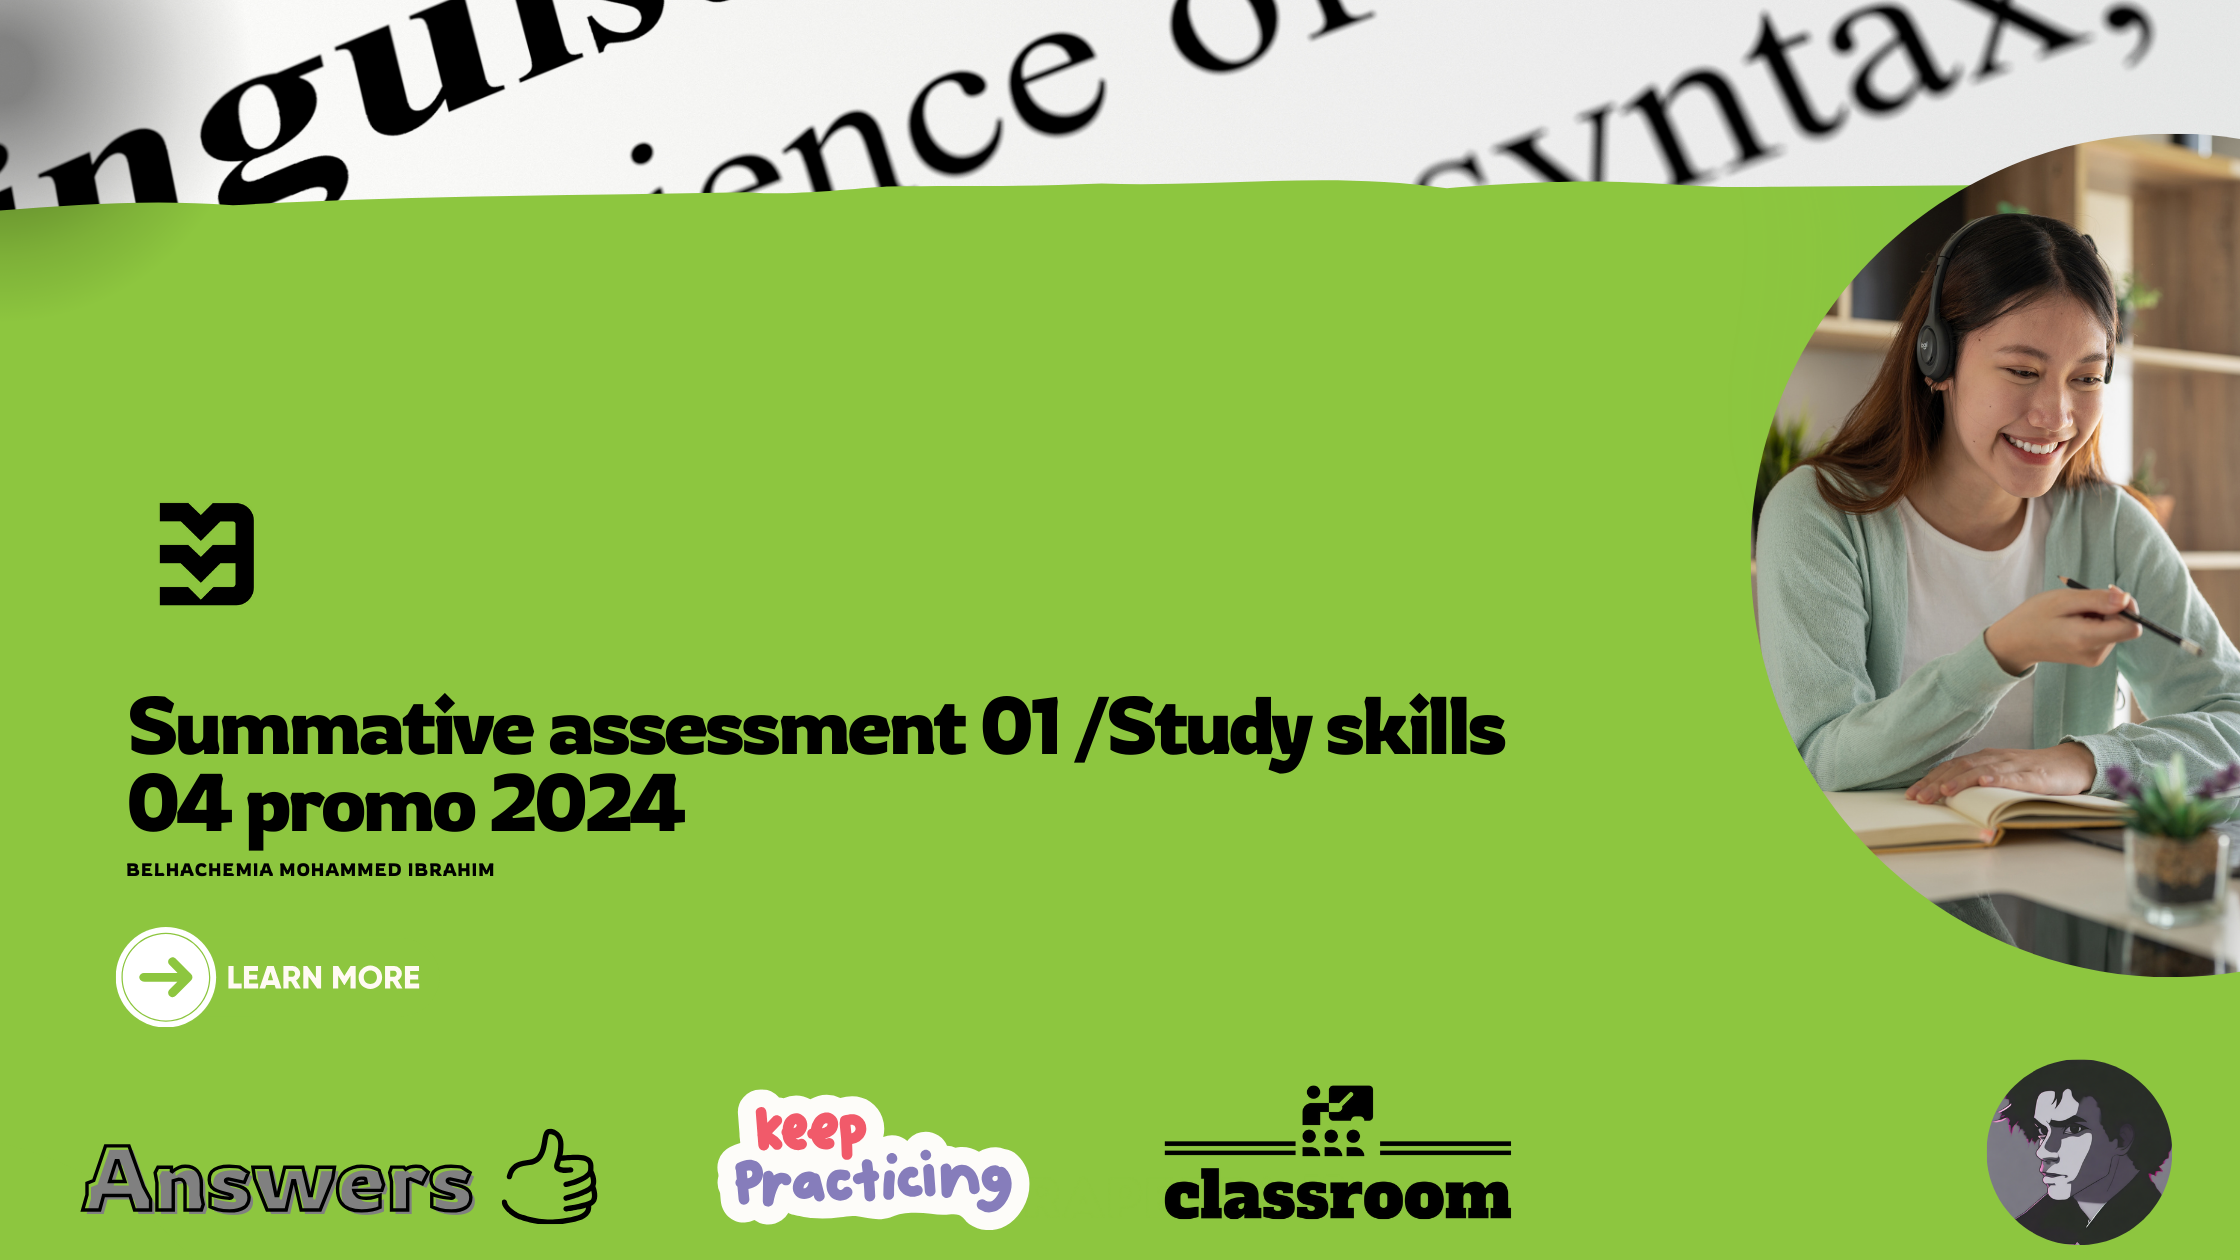 Summative assessment 01 /Study skills 04 promo 2024